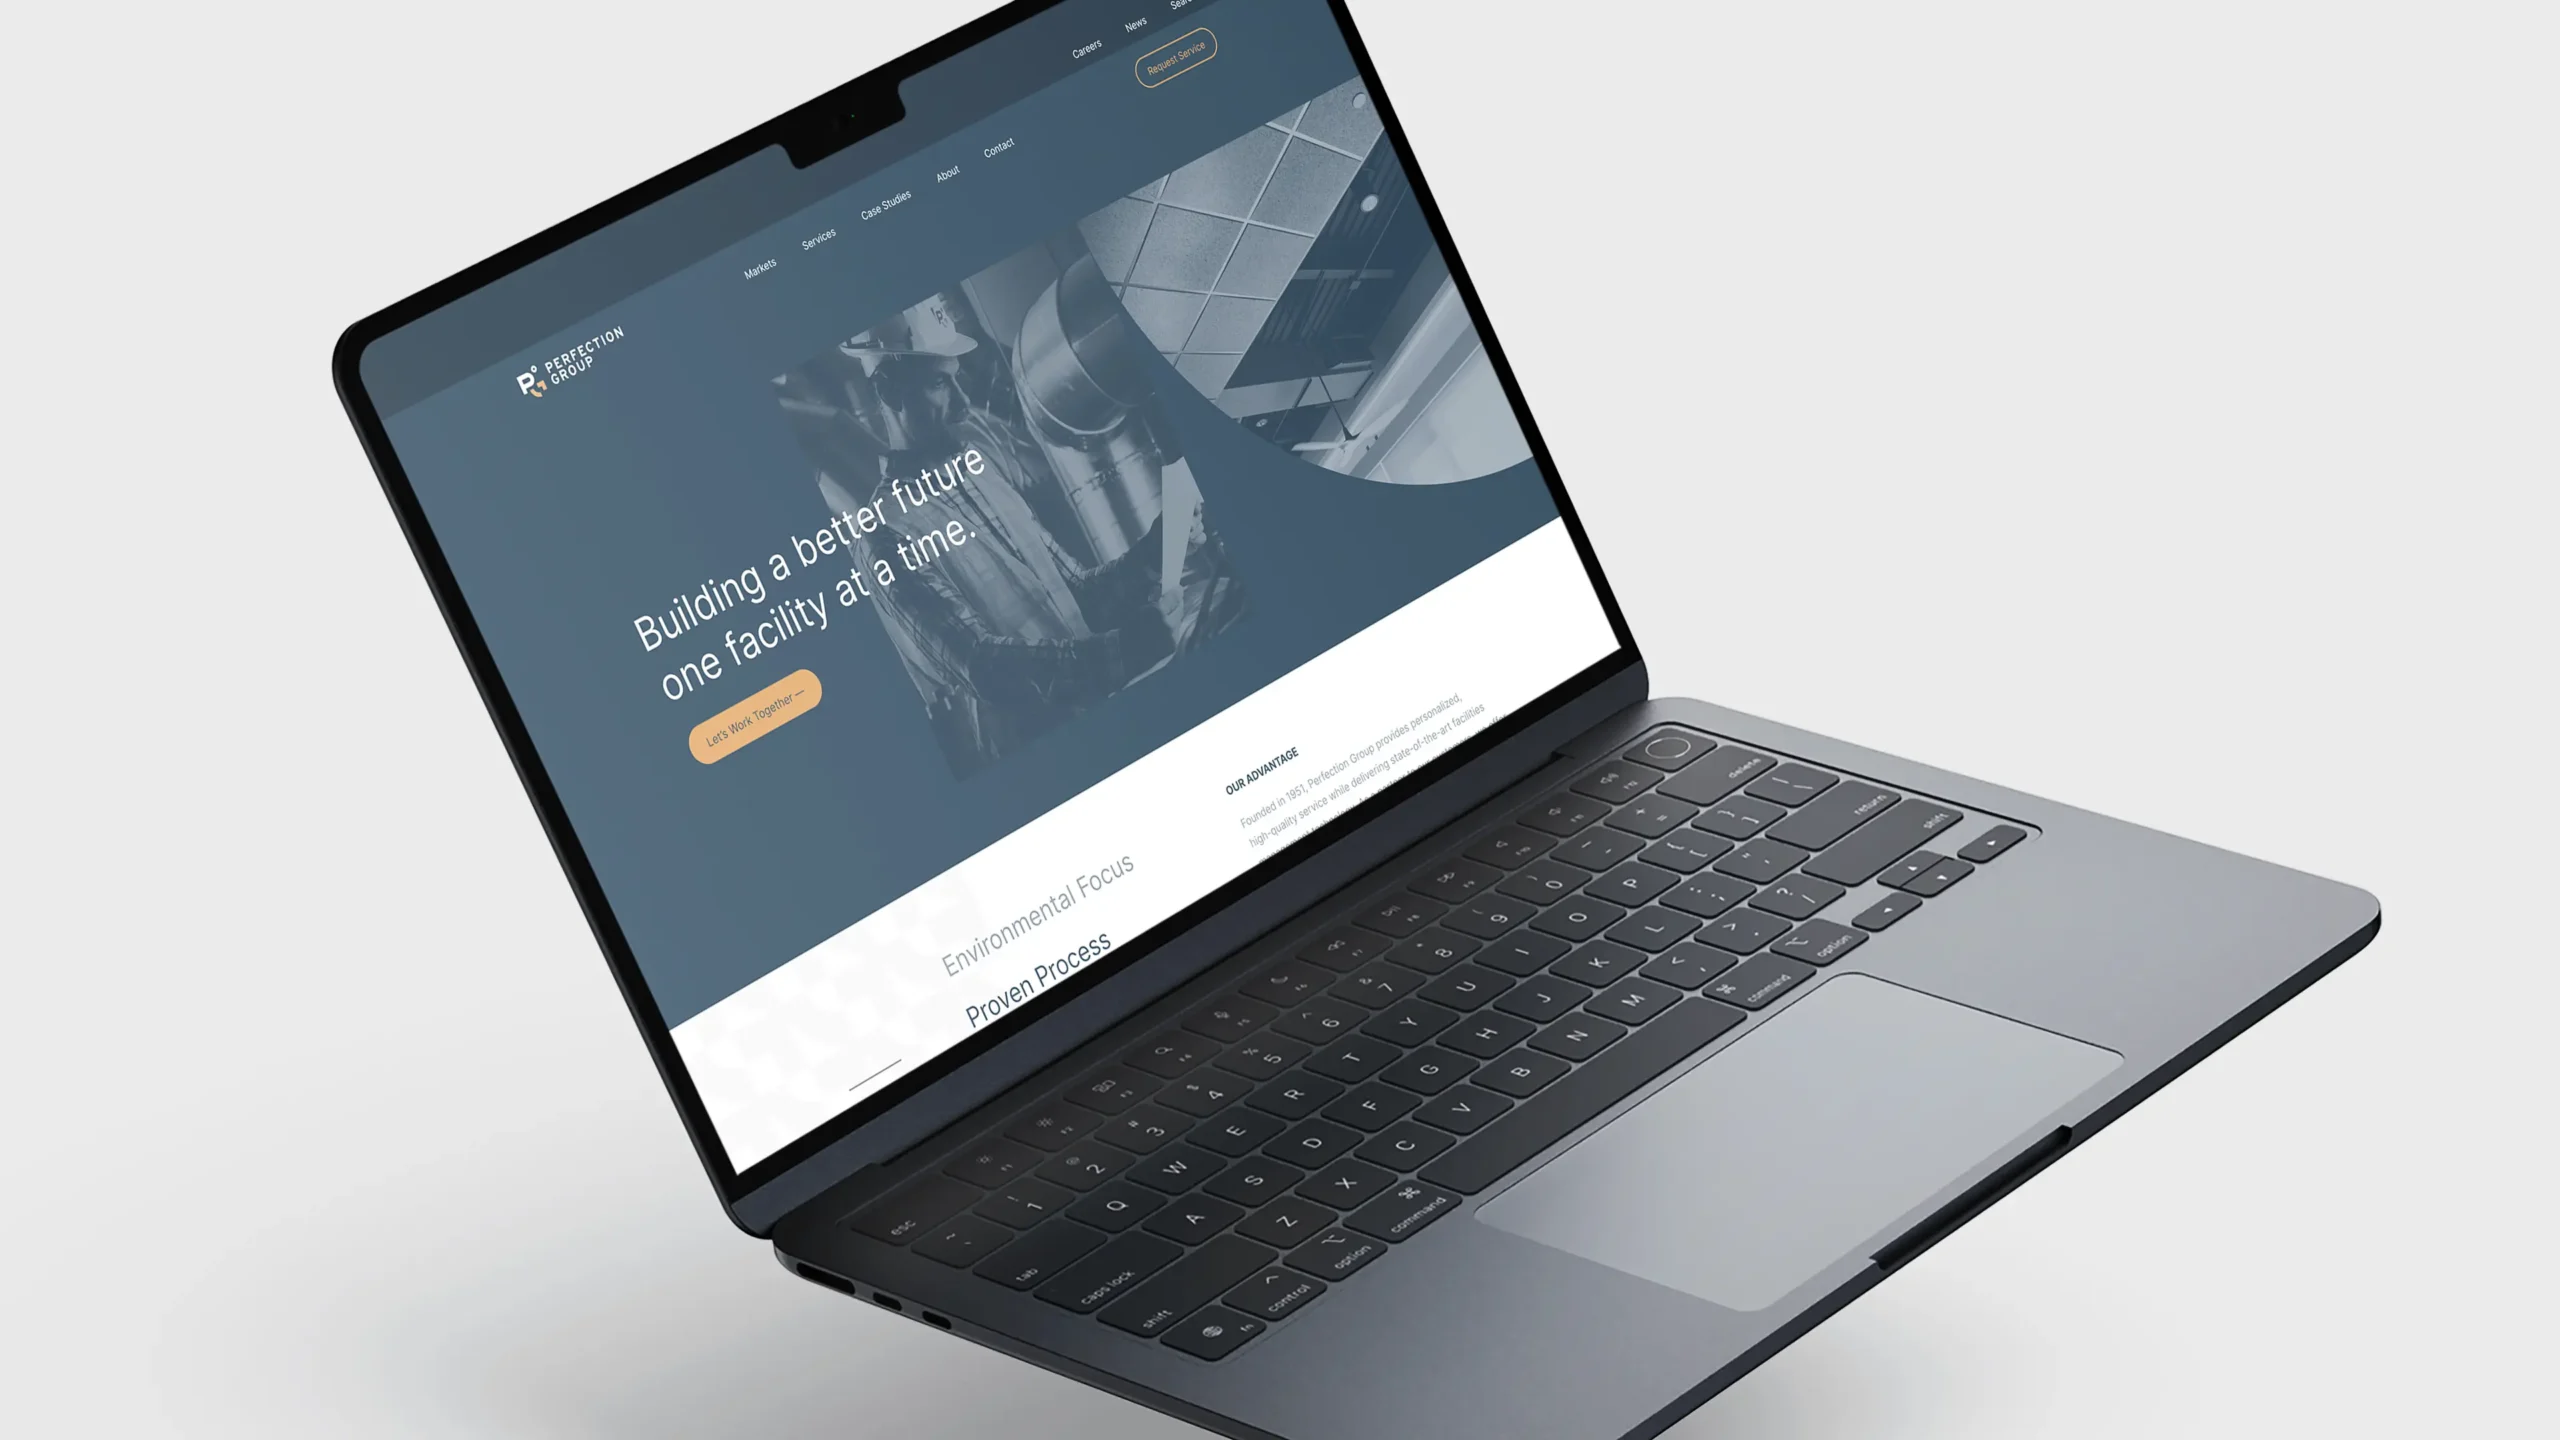 Perfection Group website design mocked up on a modern laptop